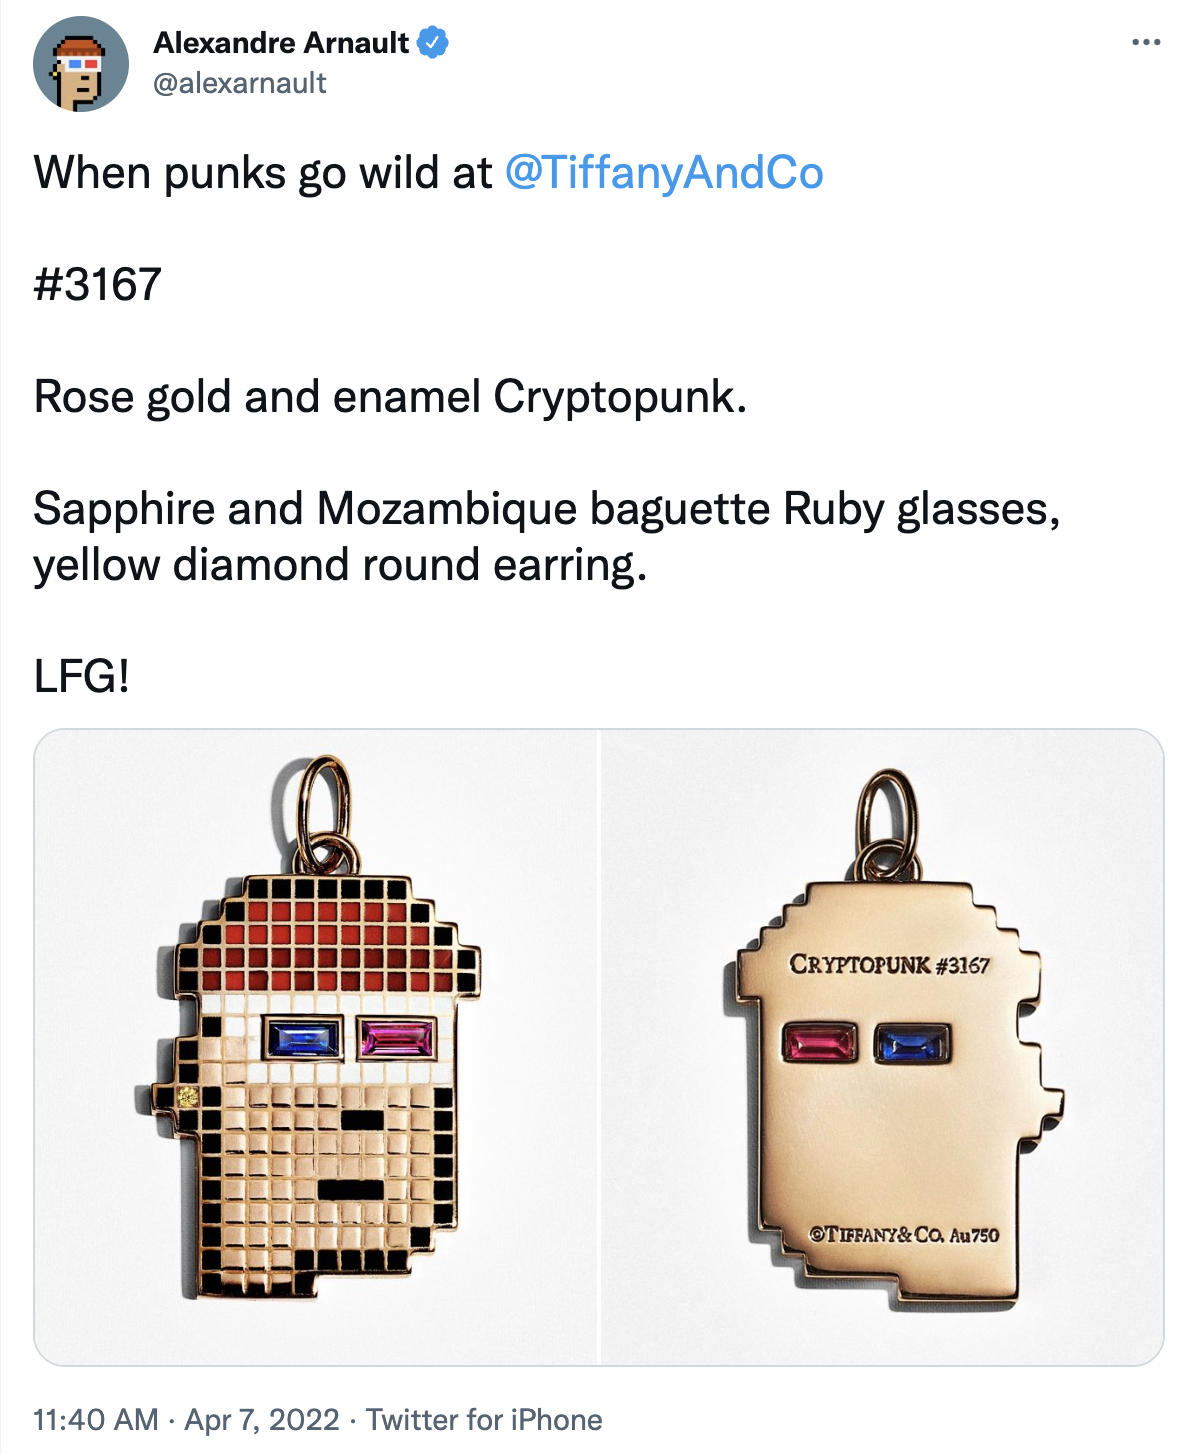 Tiffany's Alexandre Arnault joins the NFT Cryptopunks community